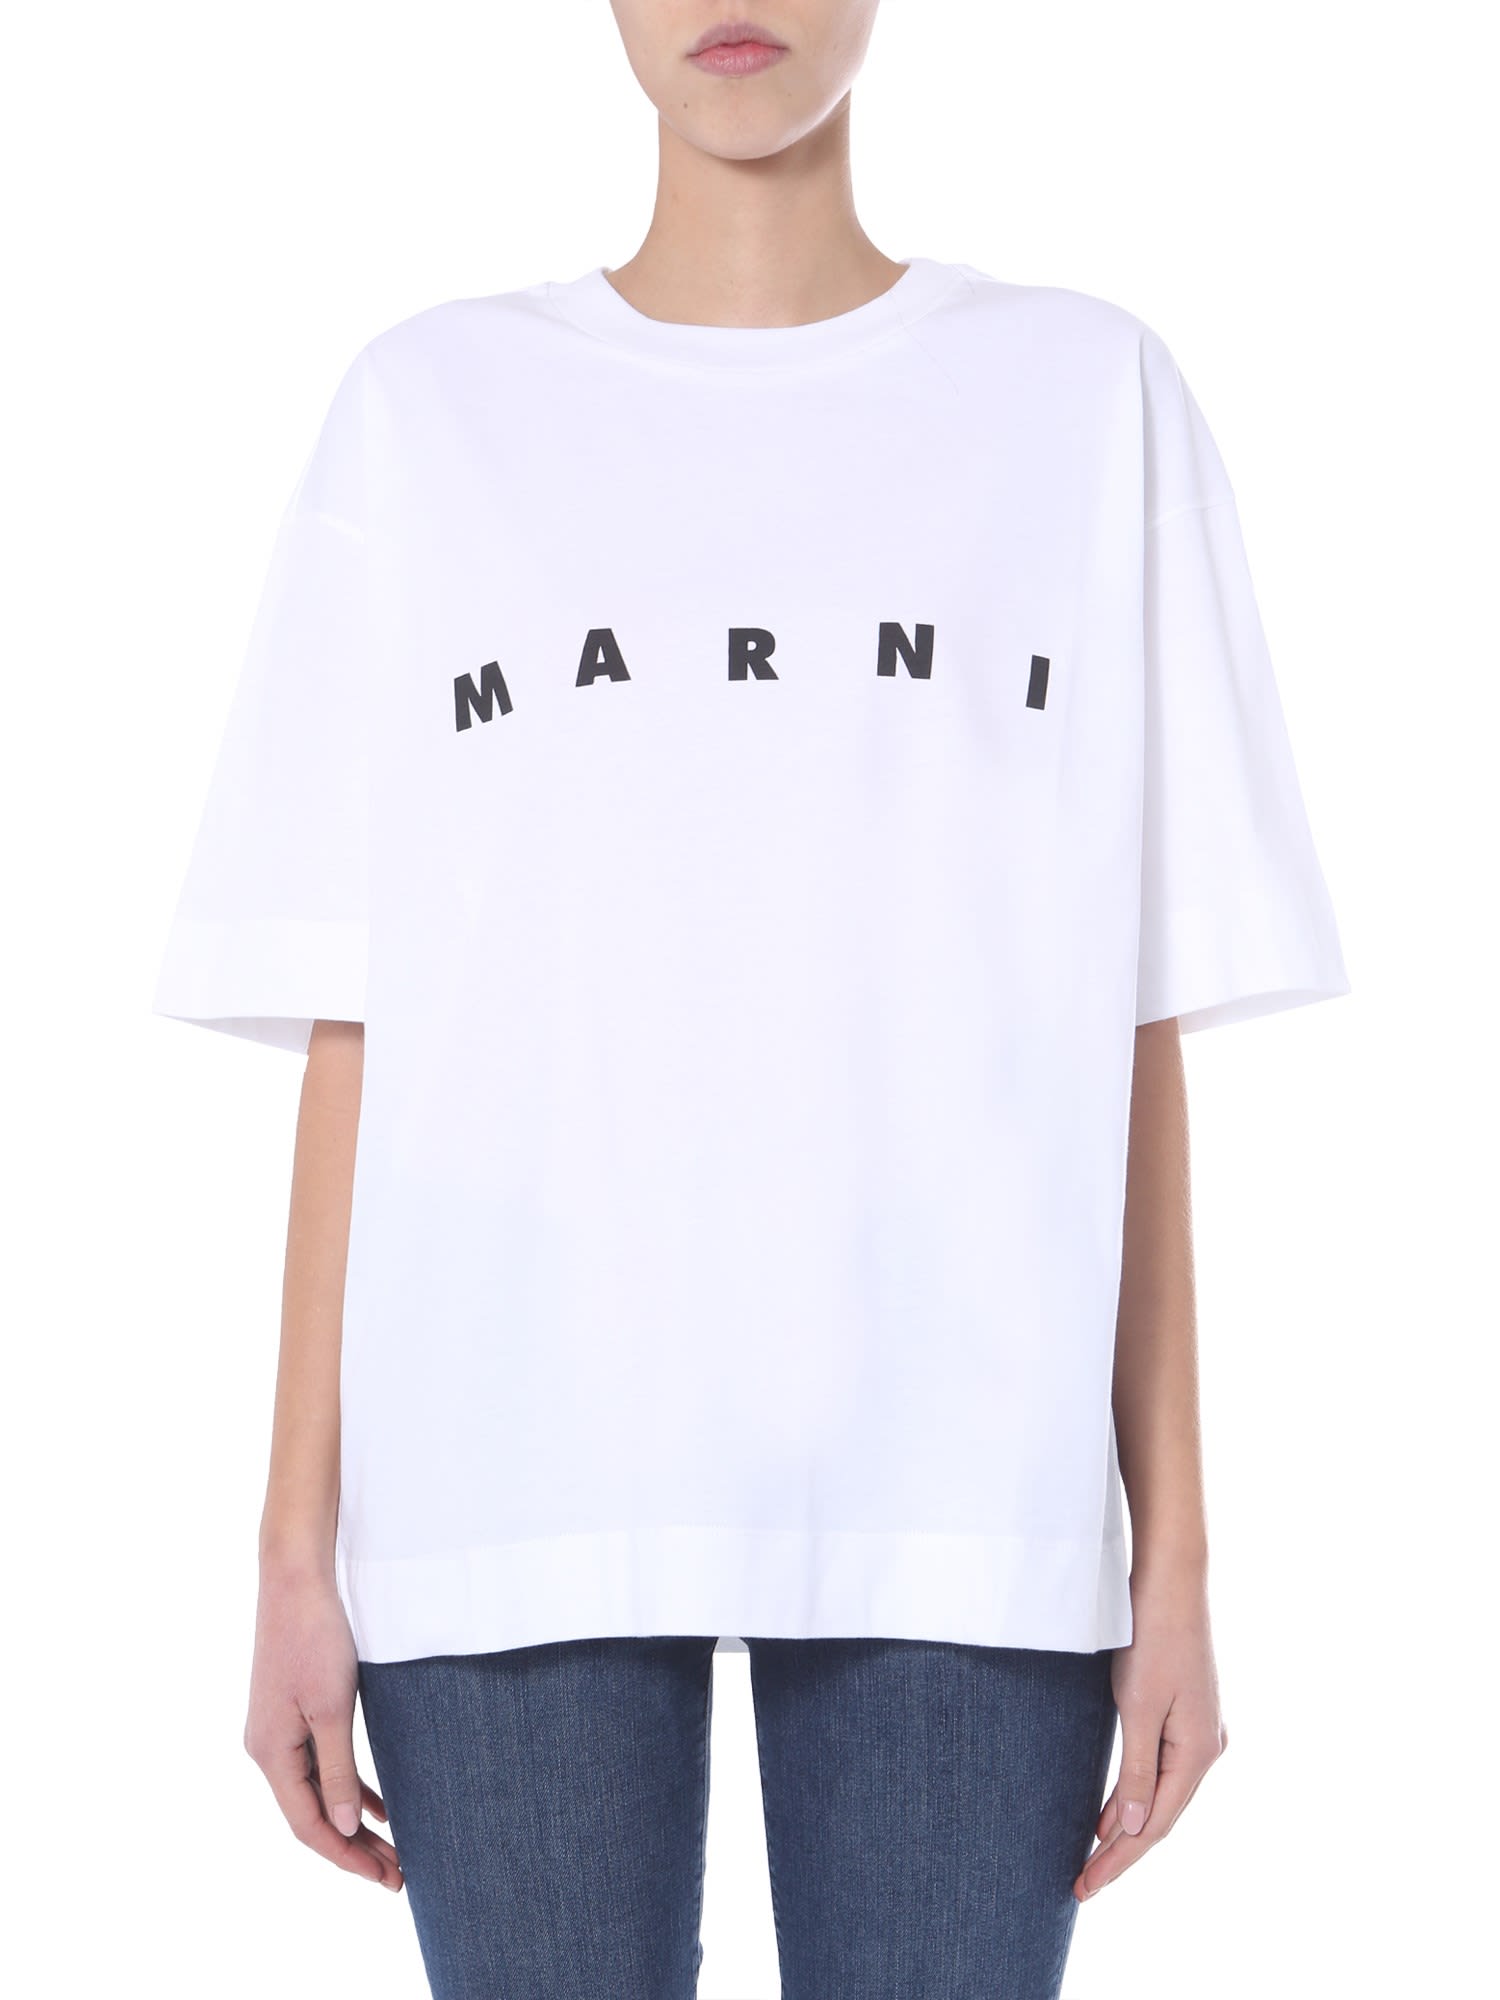 T Shirt Marni Online, 51% OFF | lagence.tv